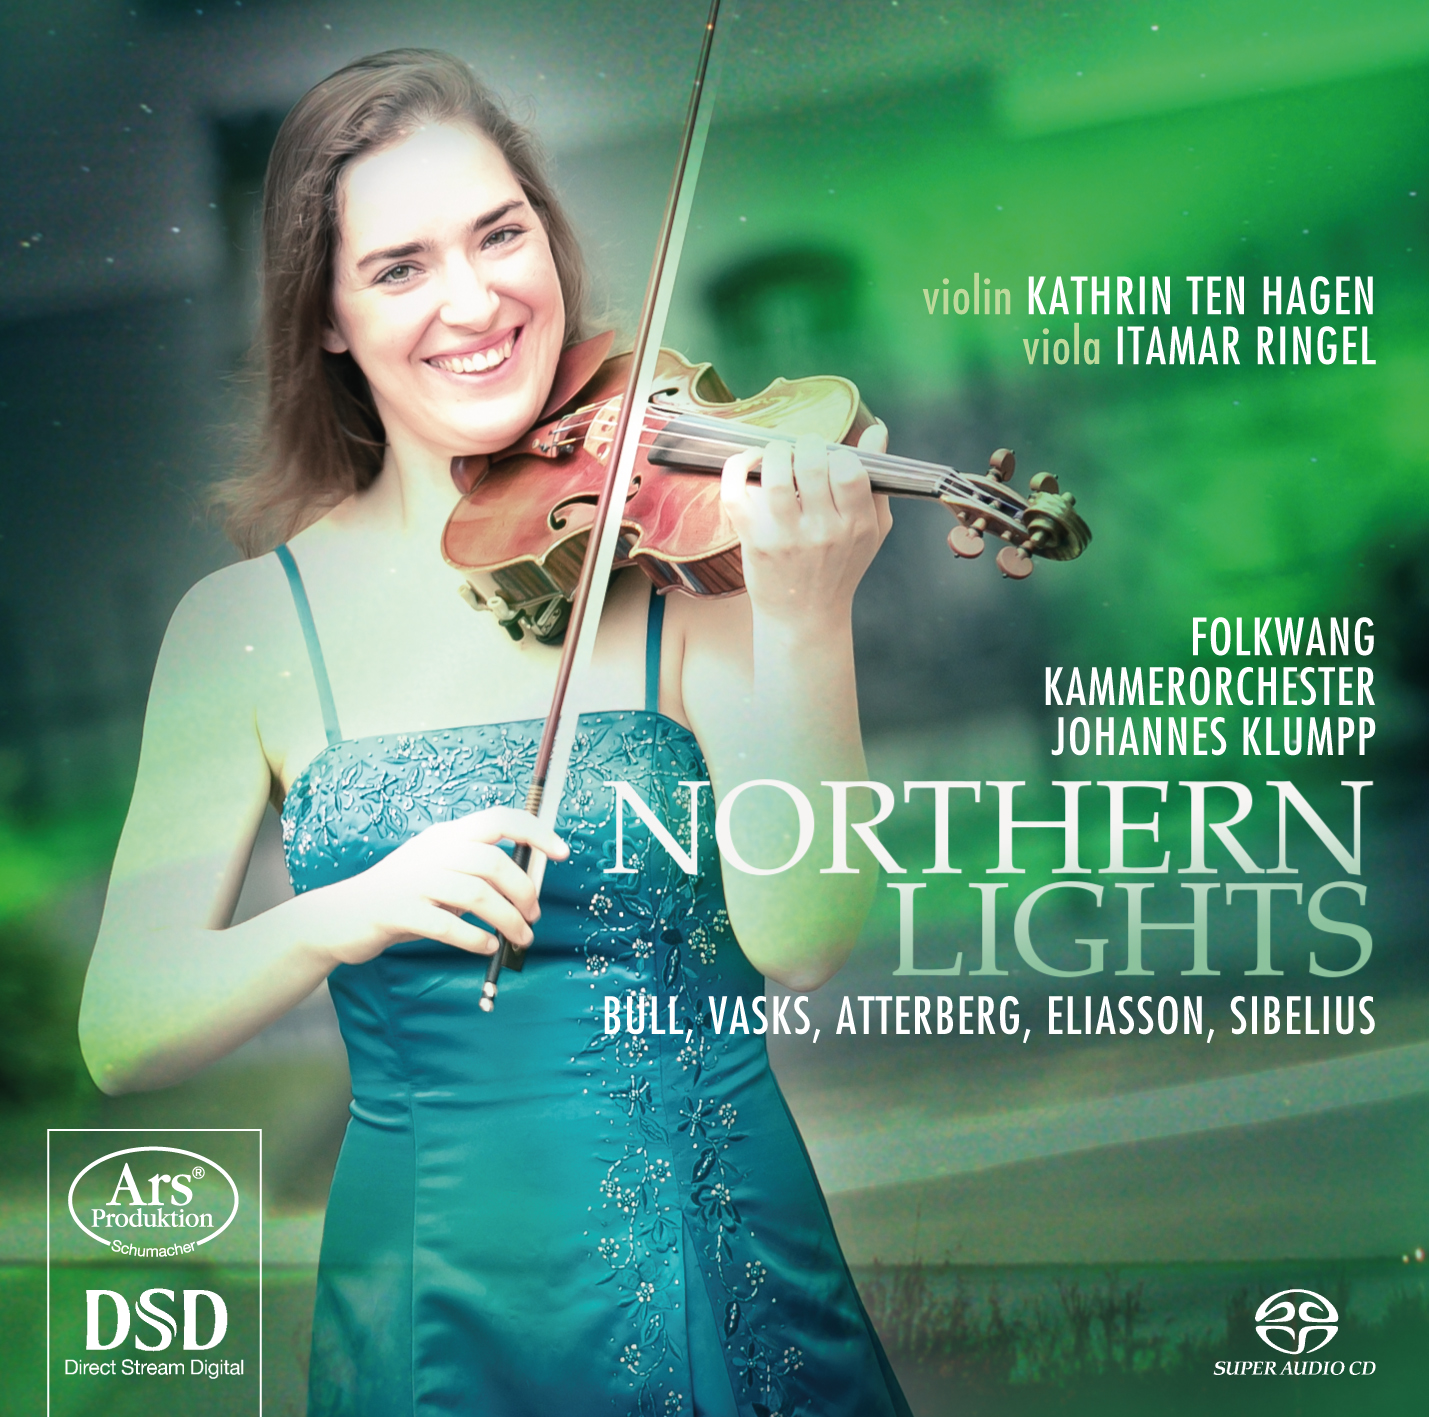 CD "Northern Lights"